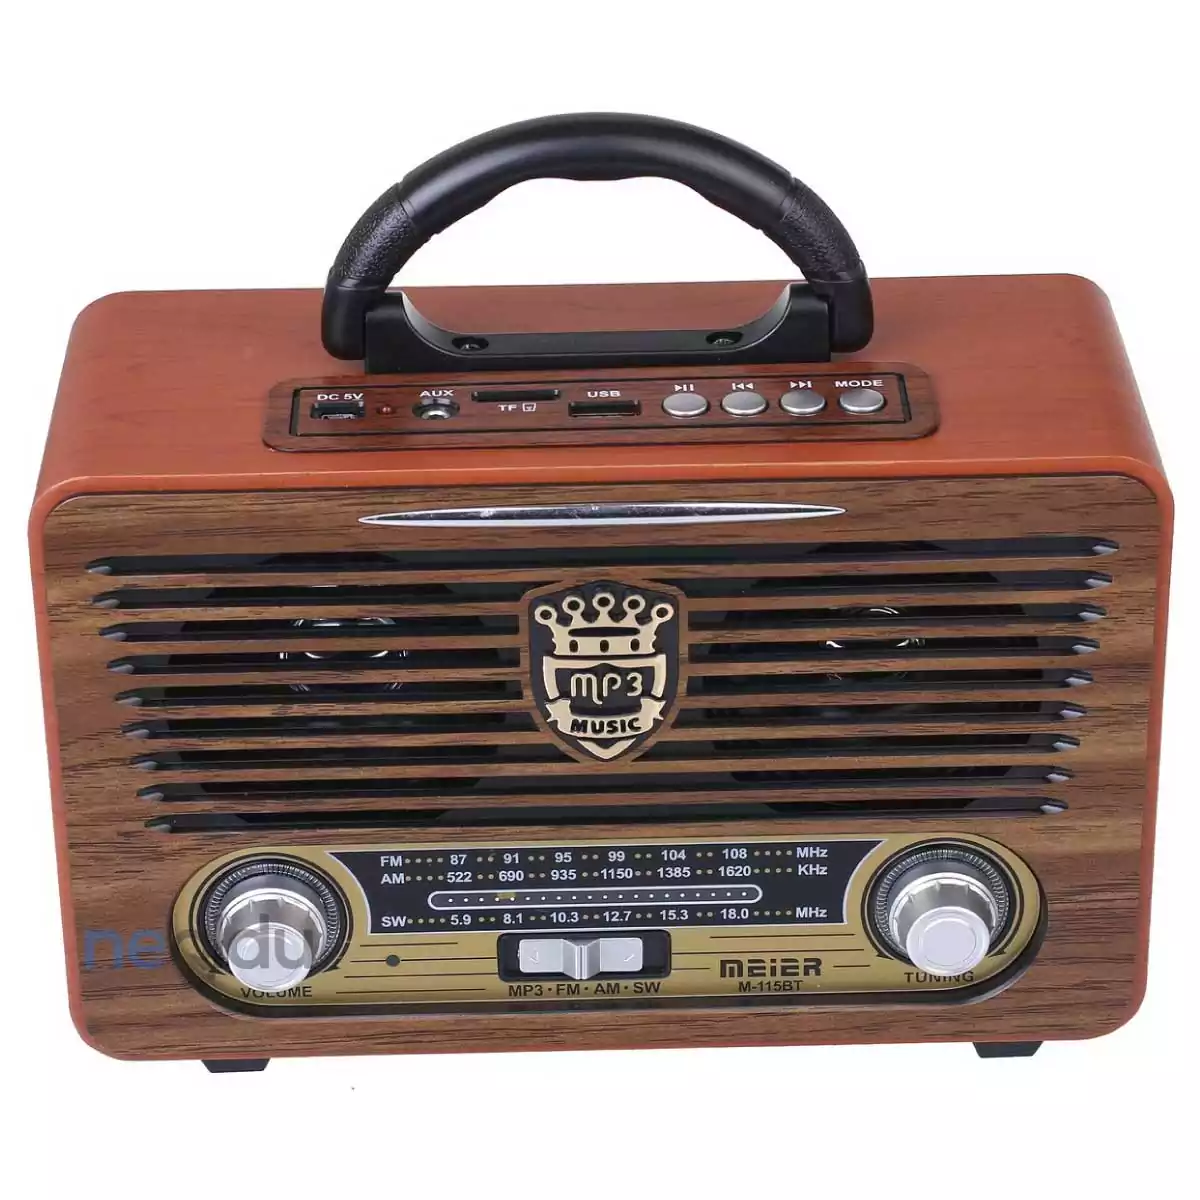 Nostaljik radyo